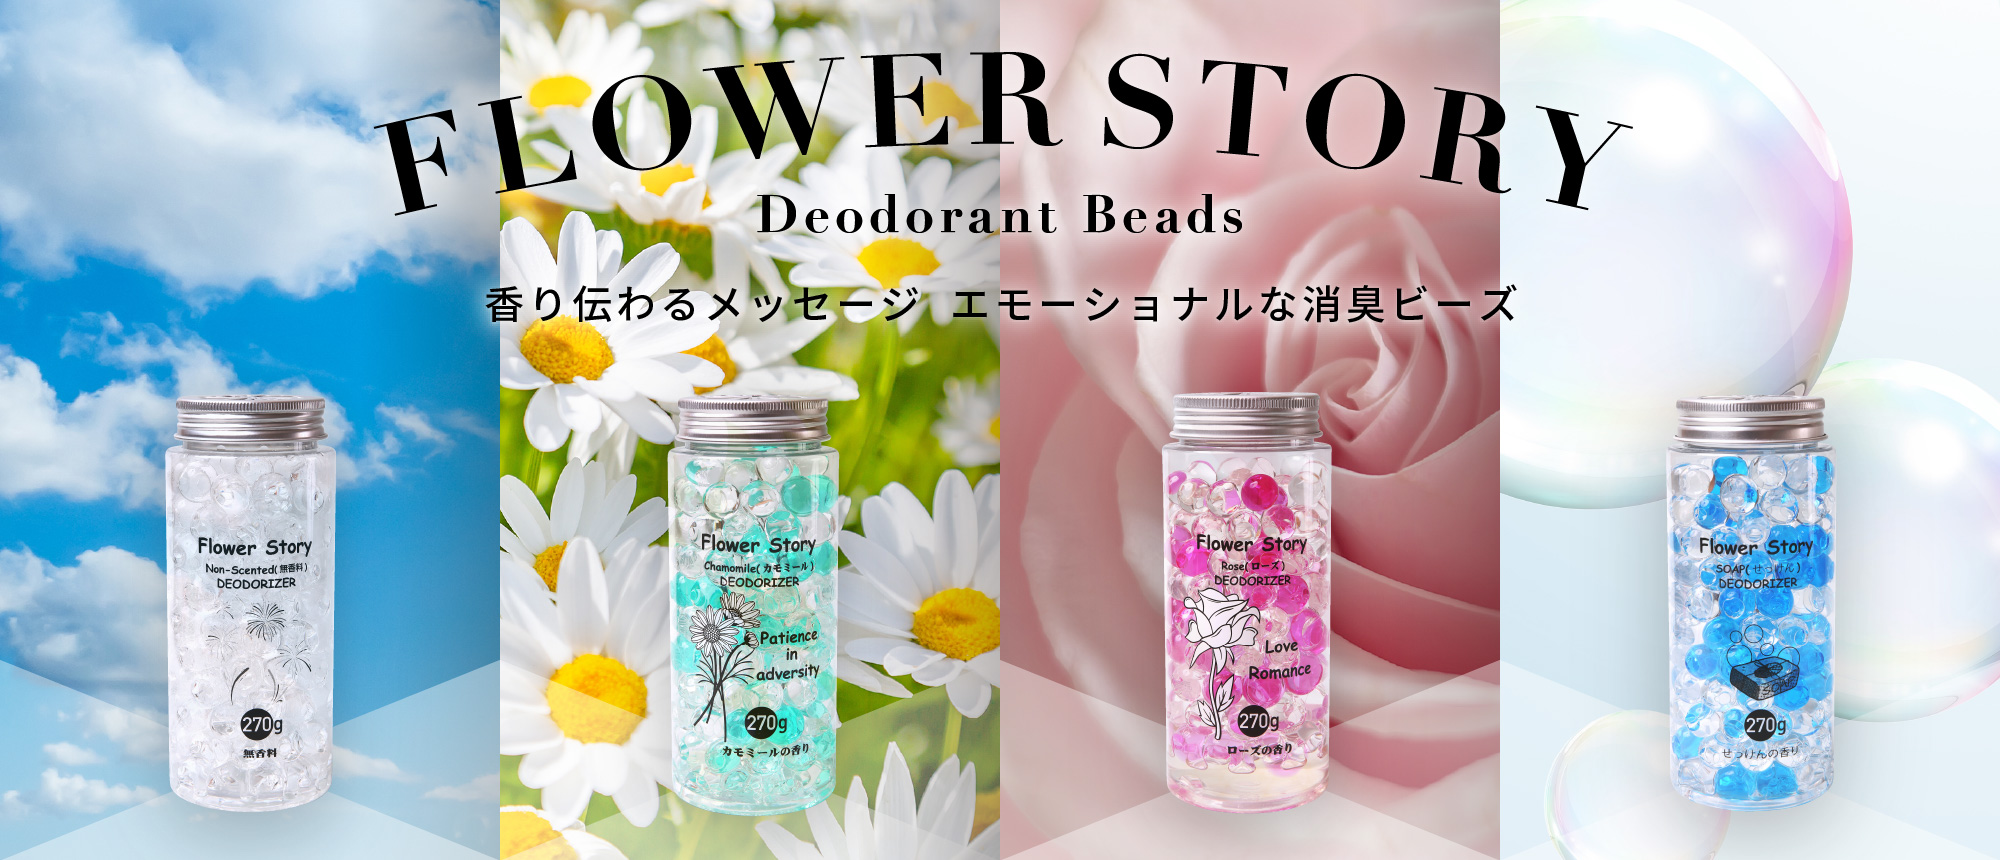 FLOWER STORY Deodorant Beads 香り伝わるメッセージ　エモーショナルな消臭ビーズ